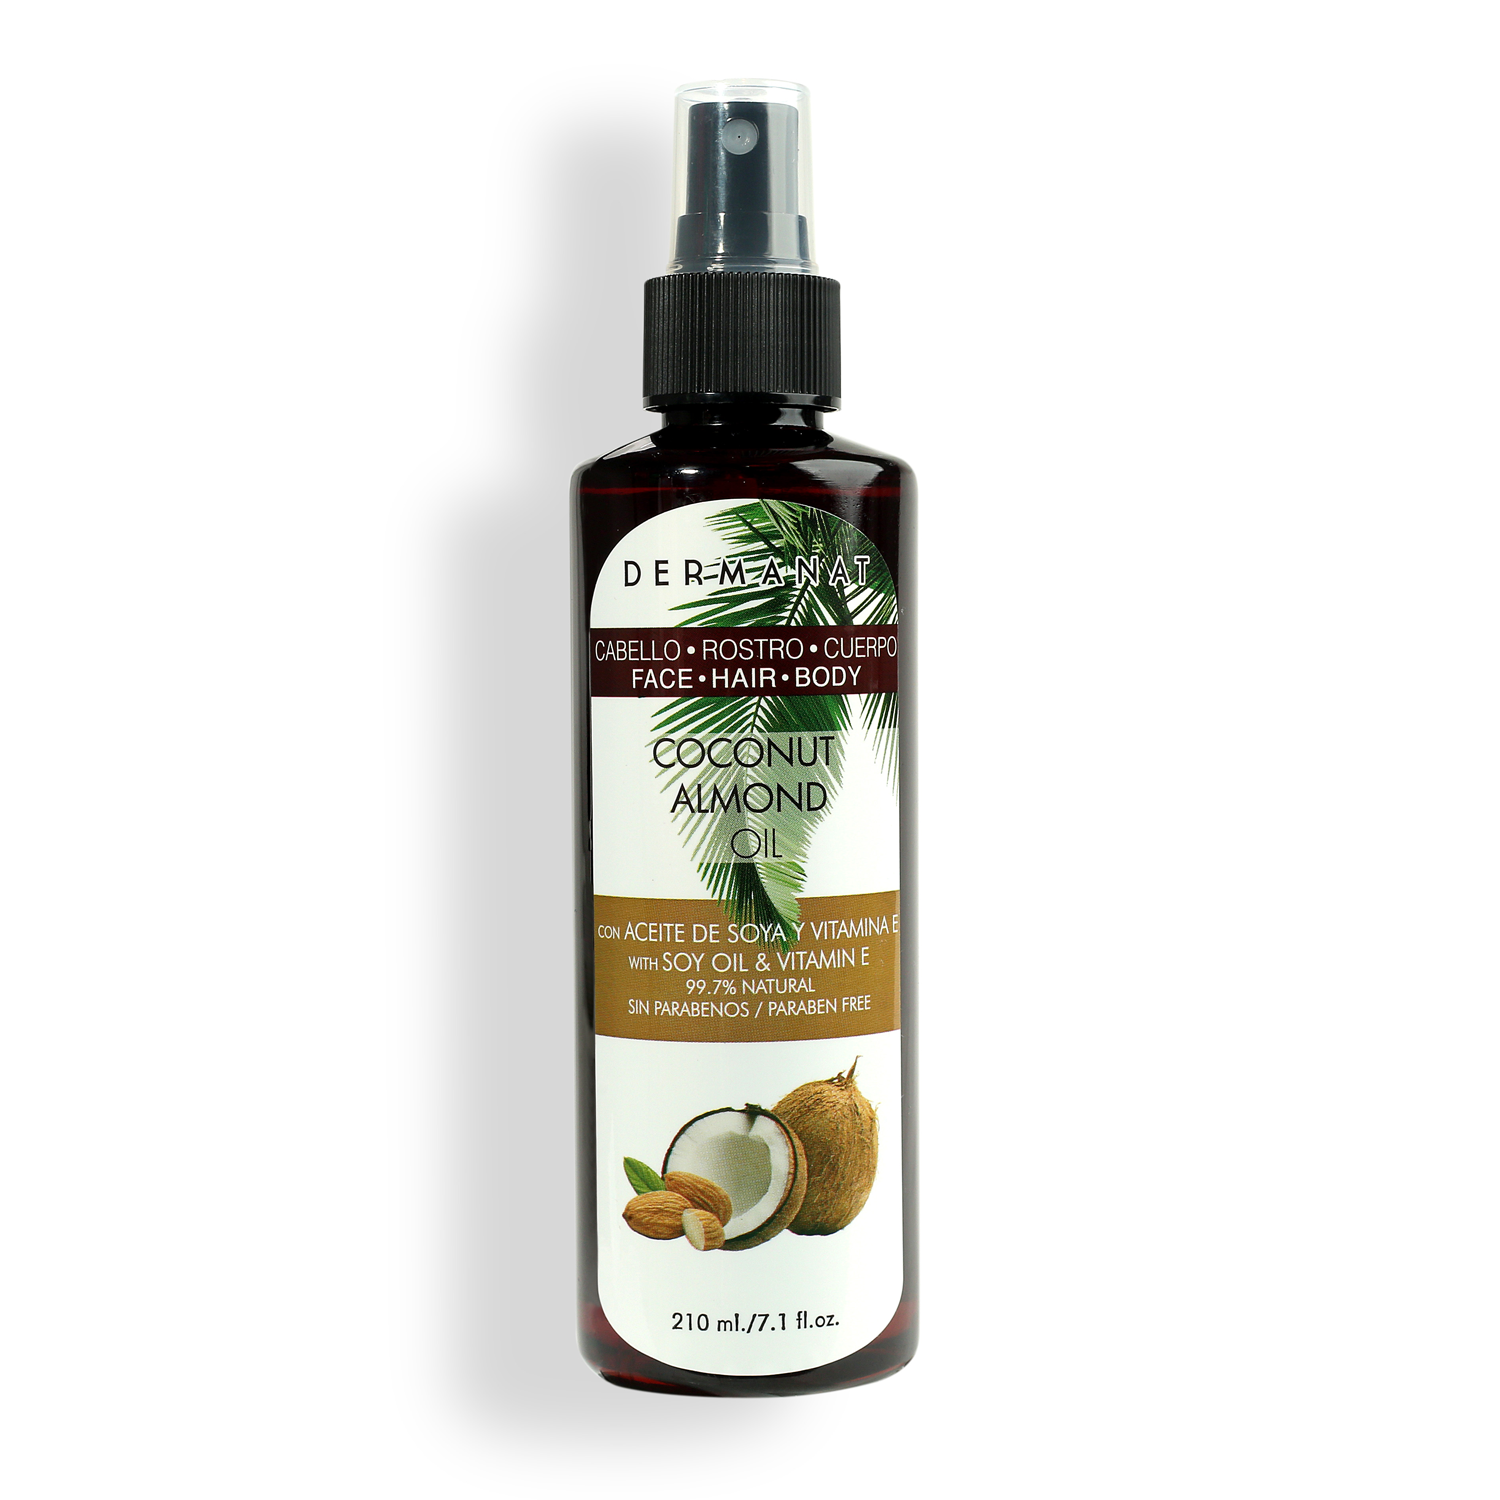 Dermanat Coconut Almond Oil